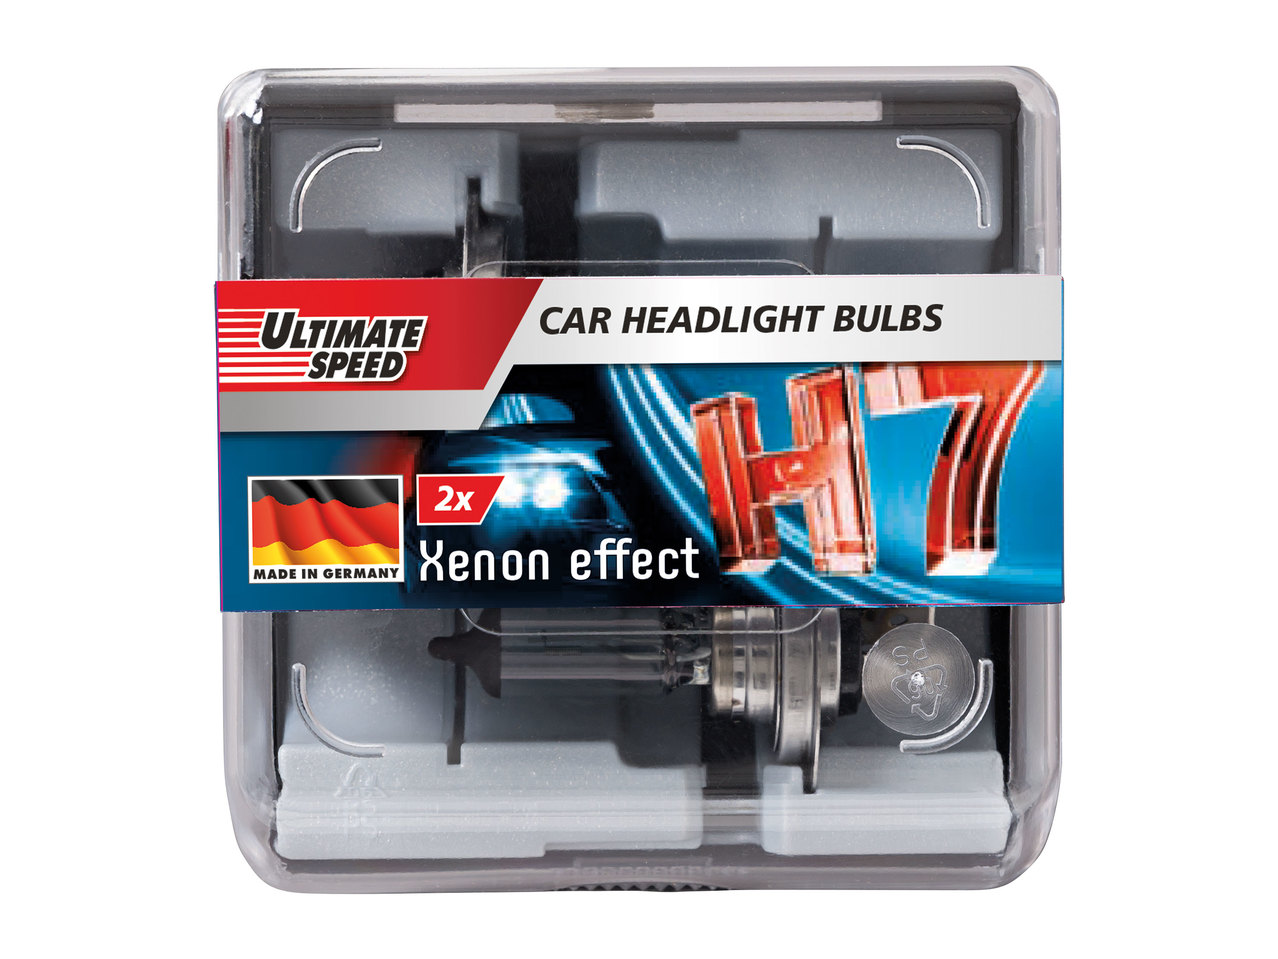 Ultimate Speed Car Headlight Bulbs1